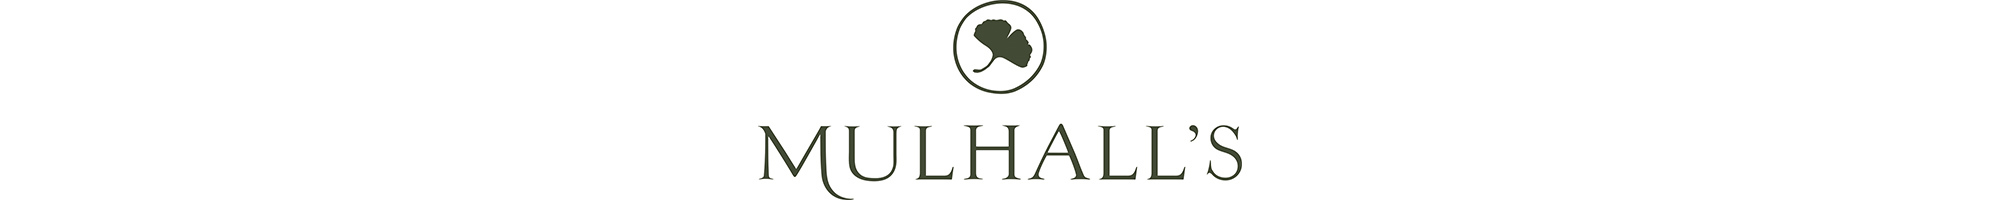 Mulhalls Logo